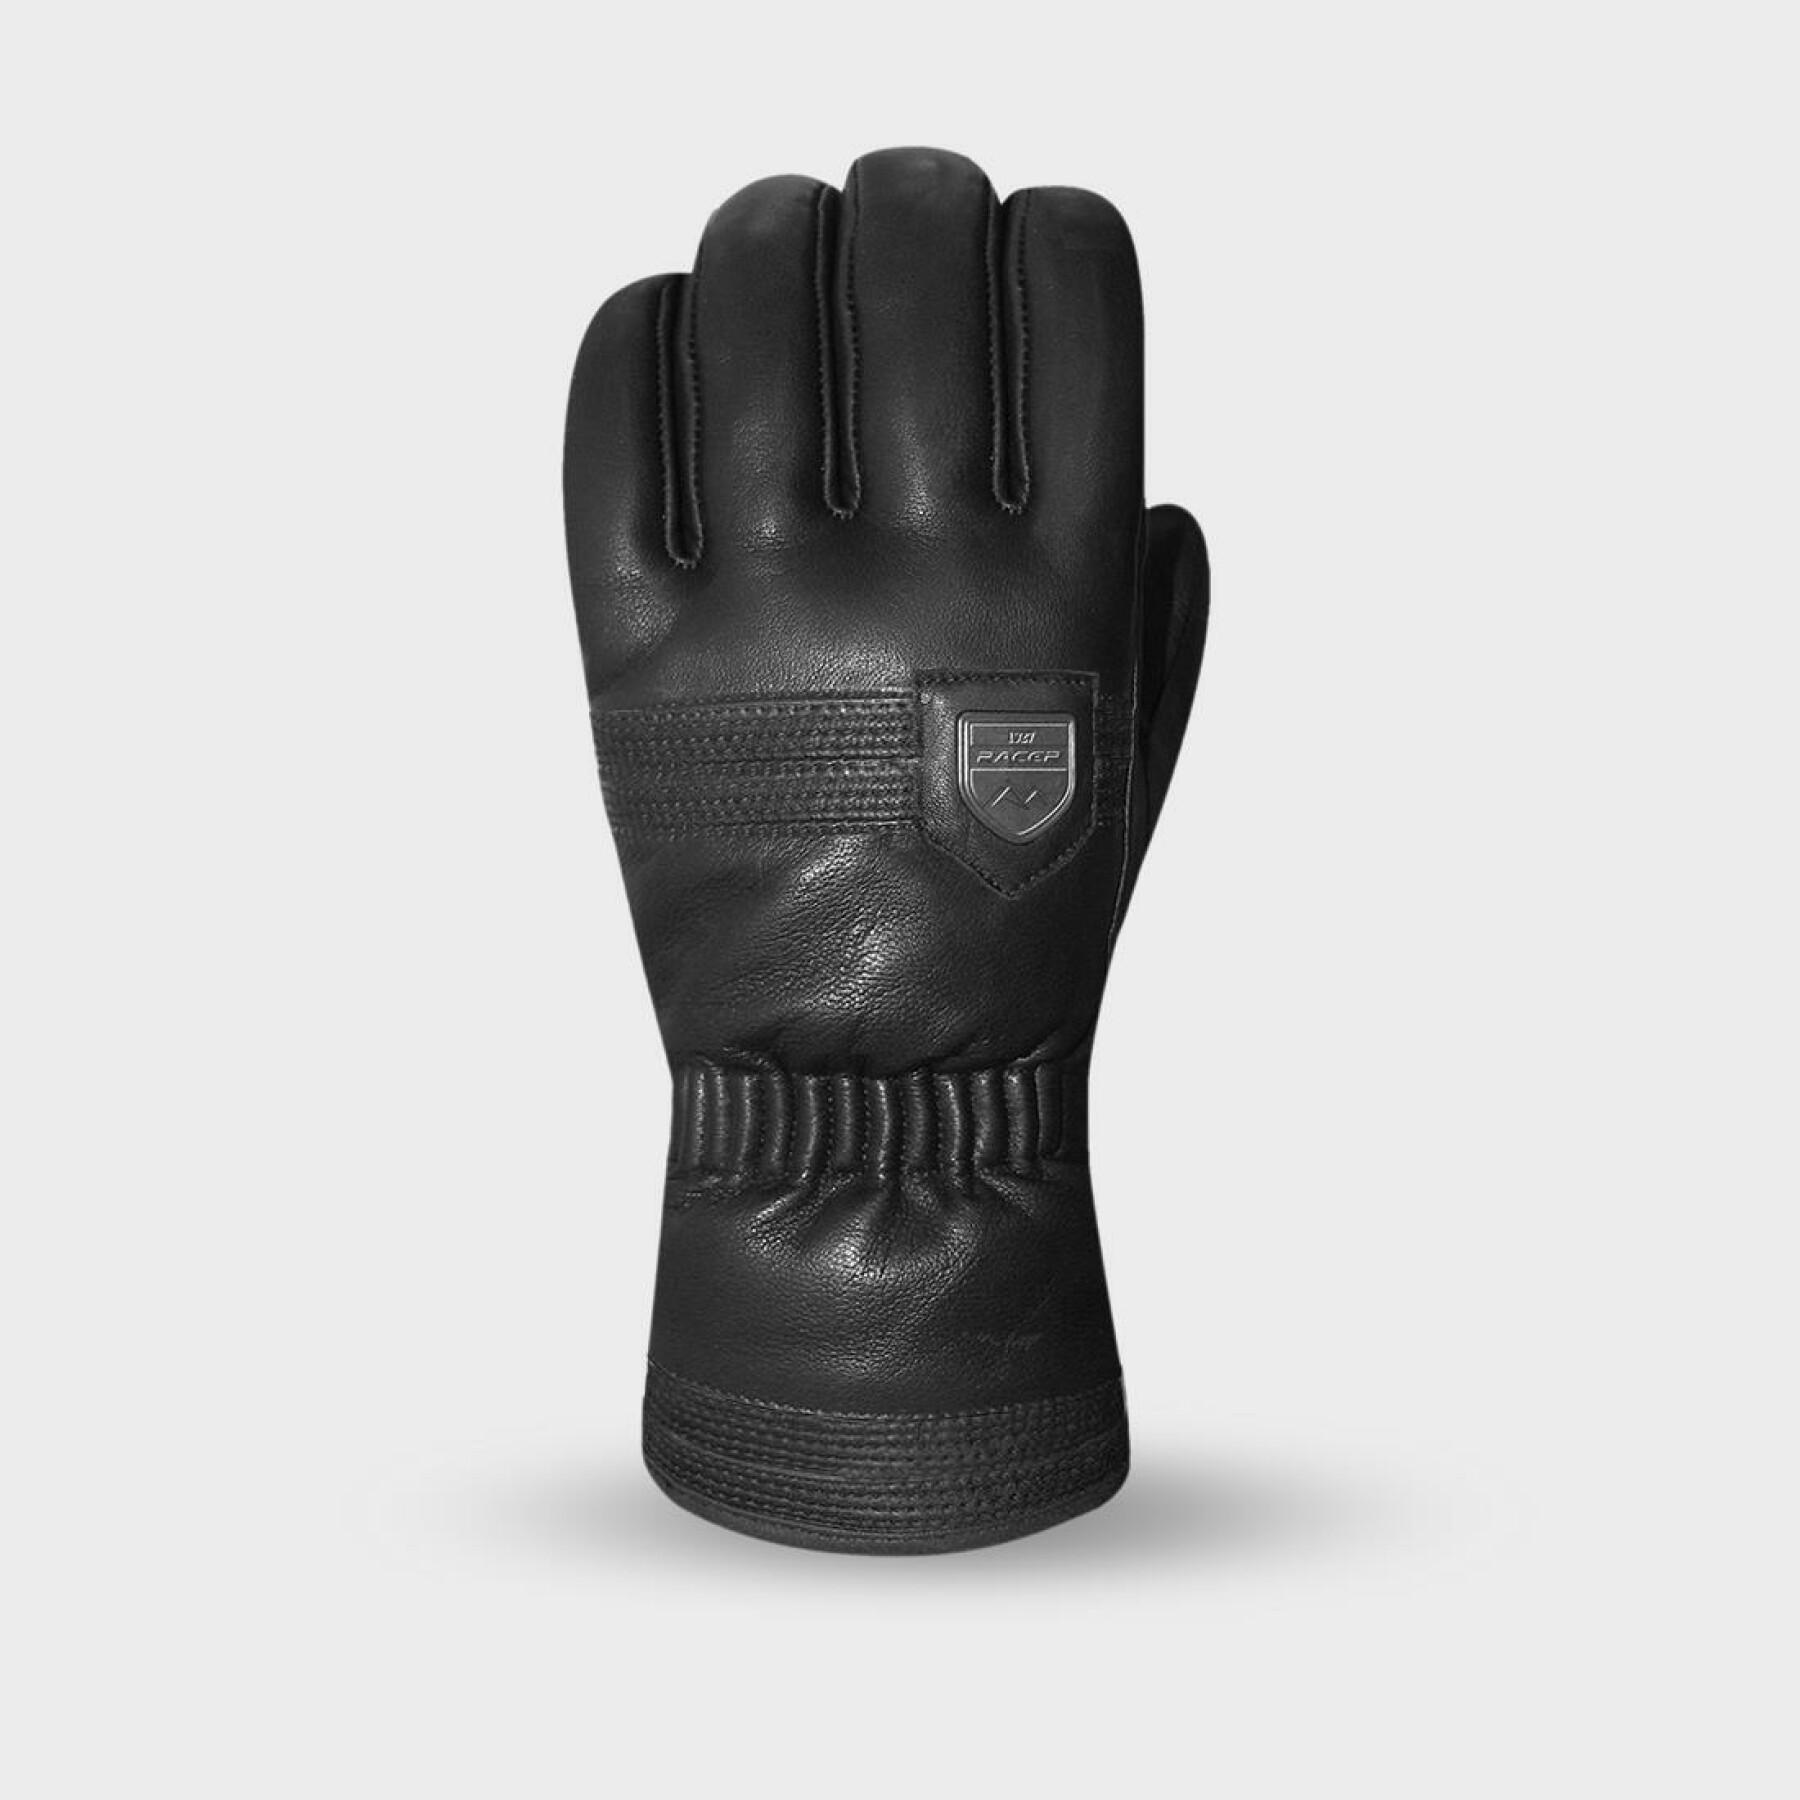 Premium leather ski gloves Racer primaloft